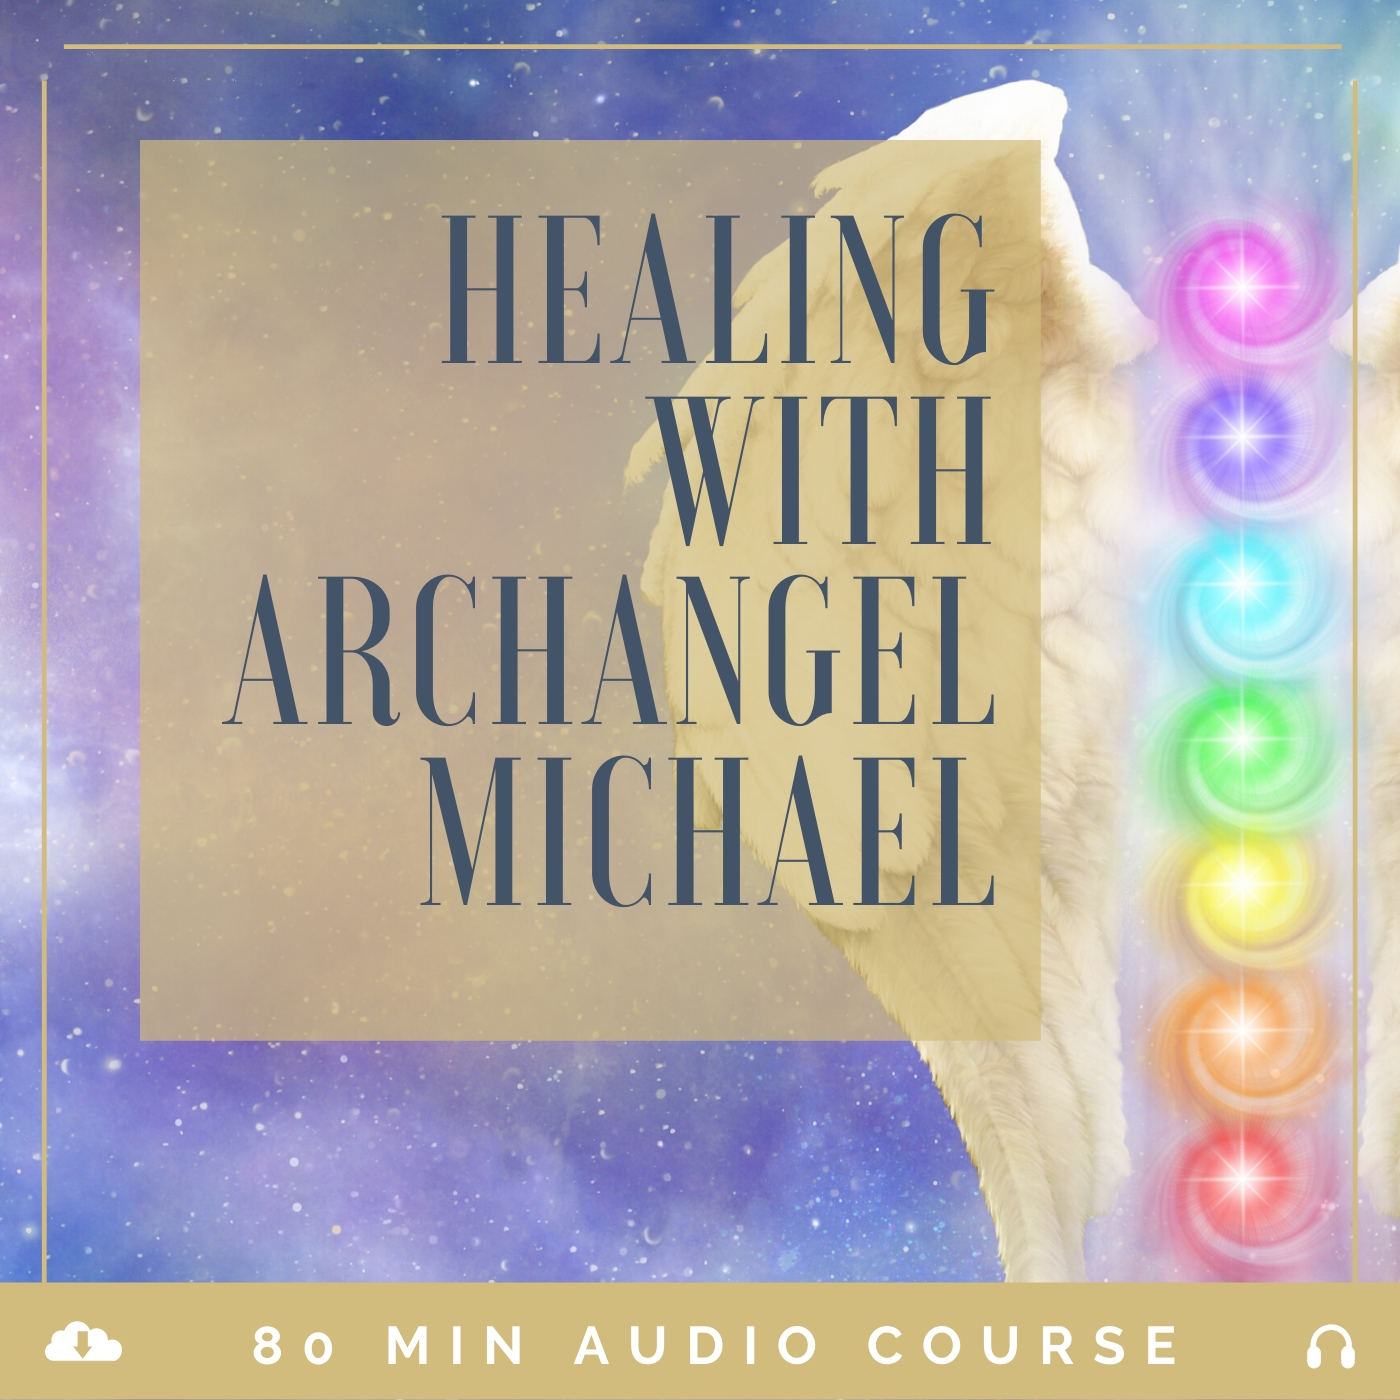 Archangel-Michael